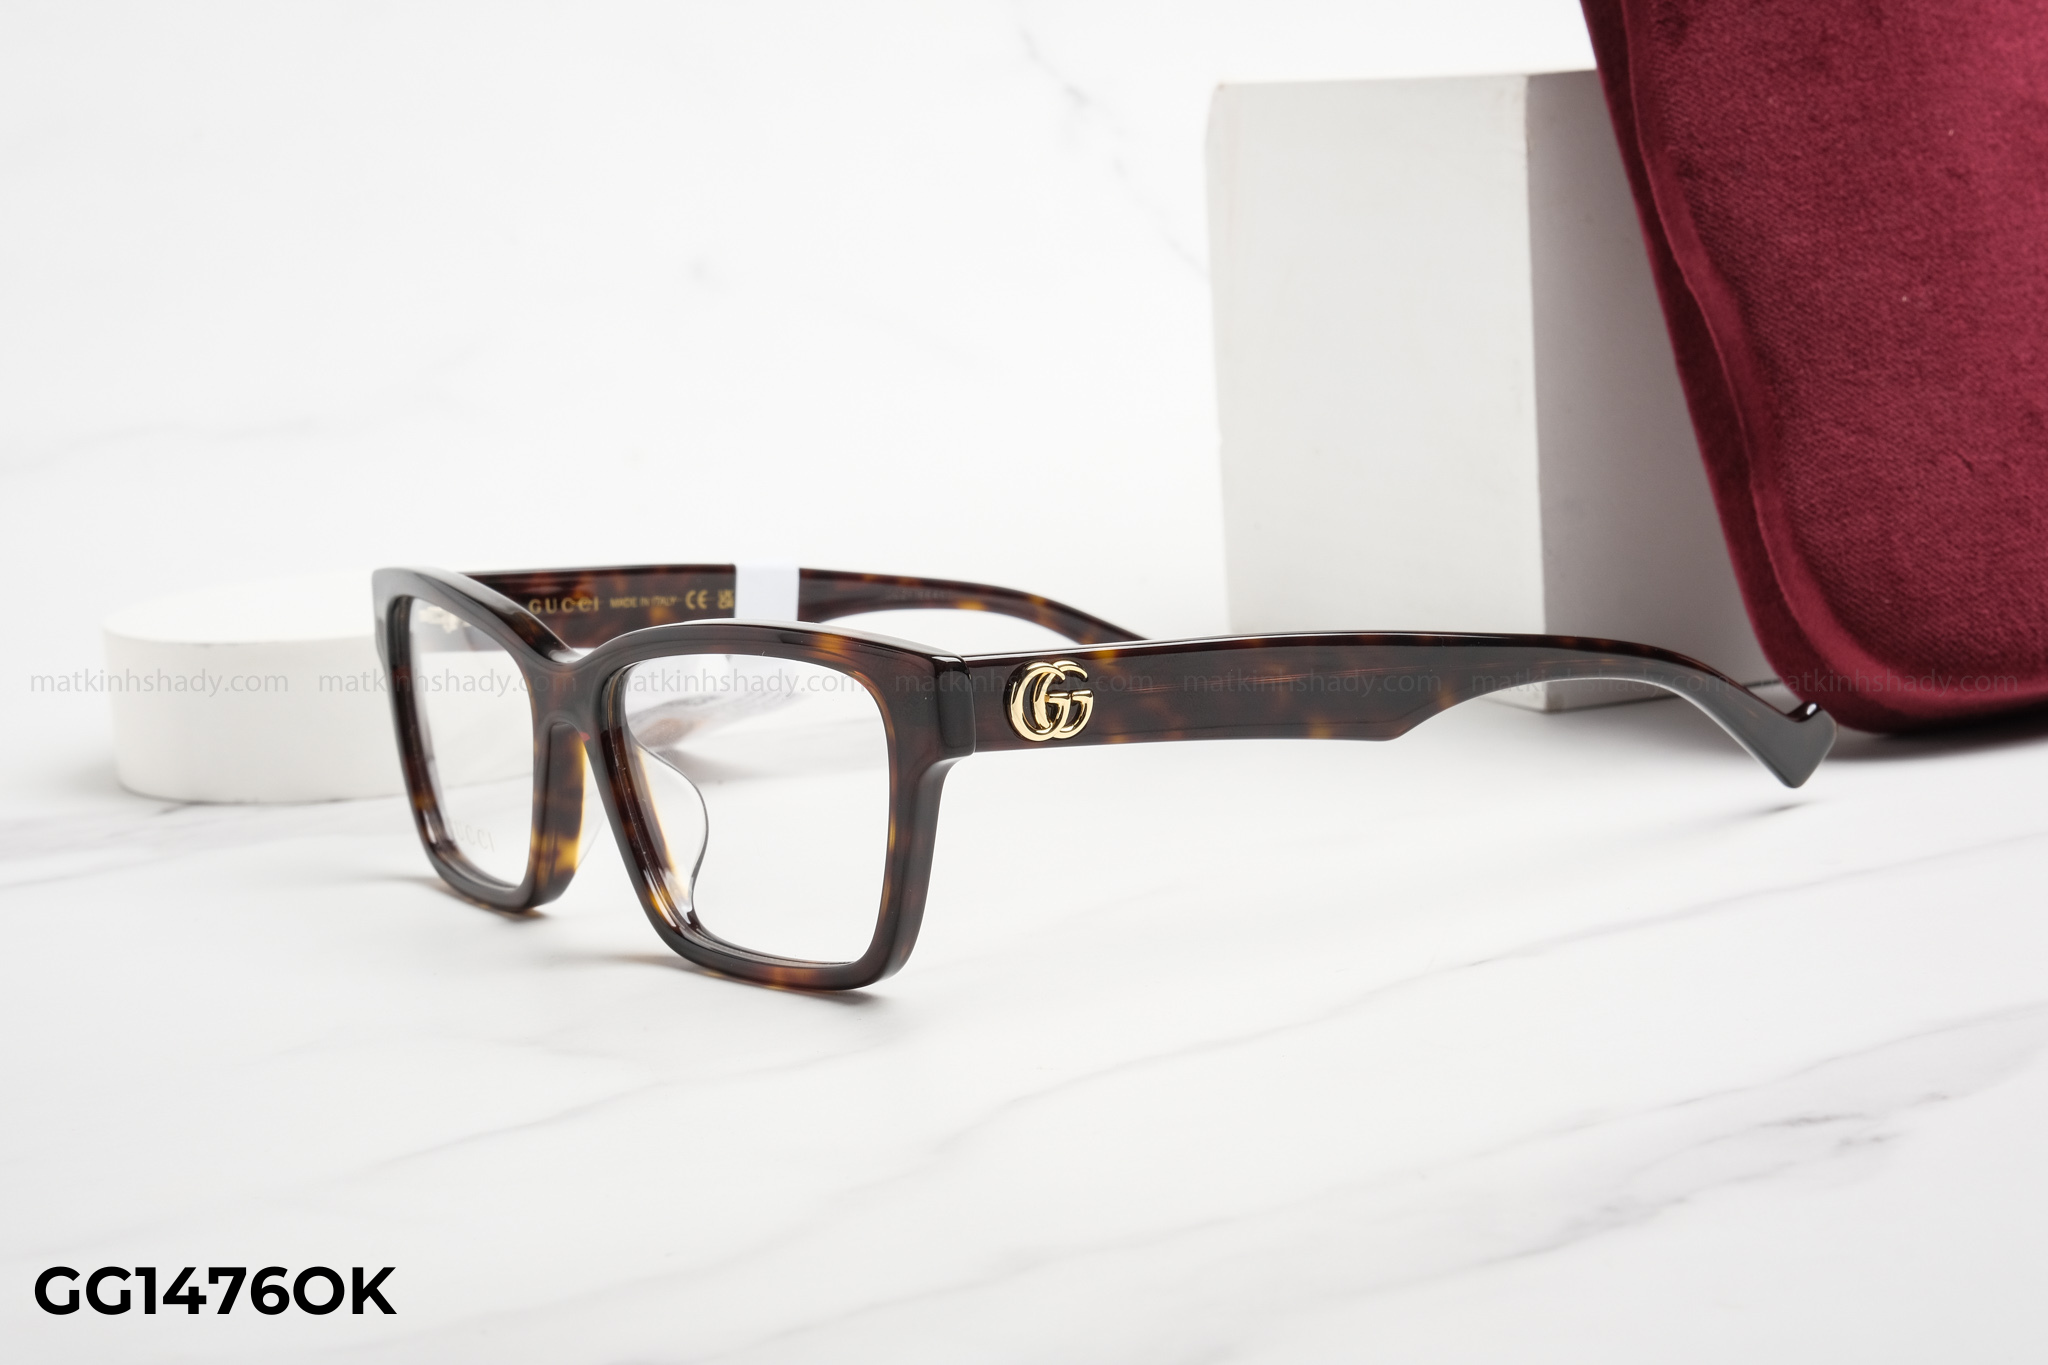  Gucci Eyewear - Glasses - GG1476OK 